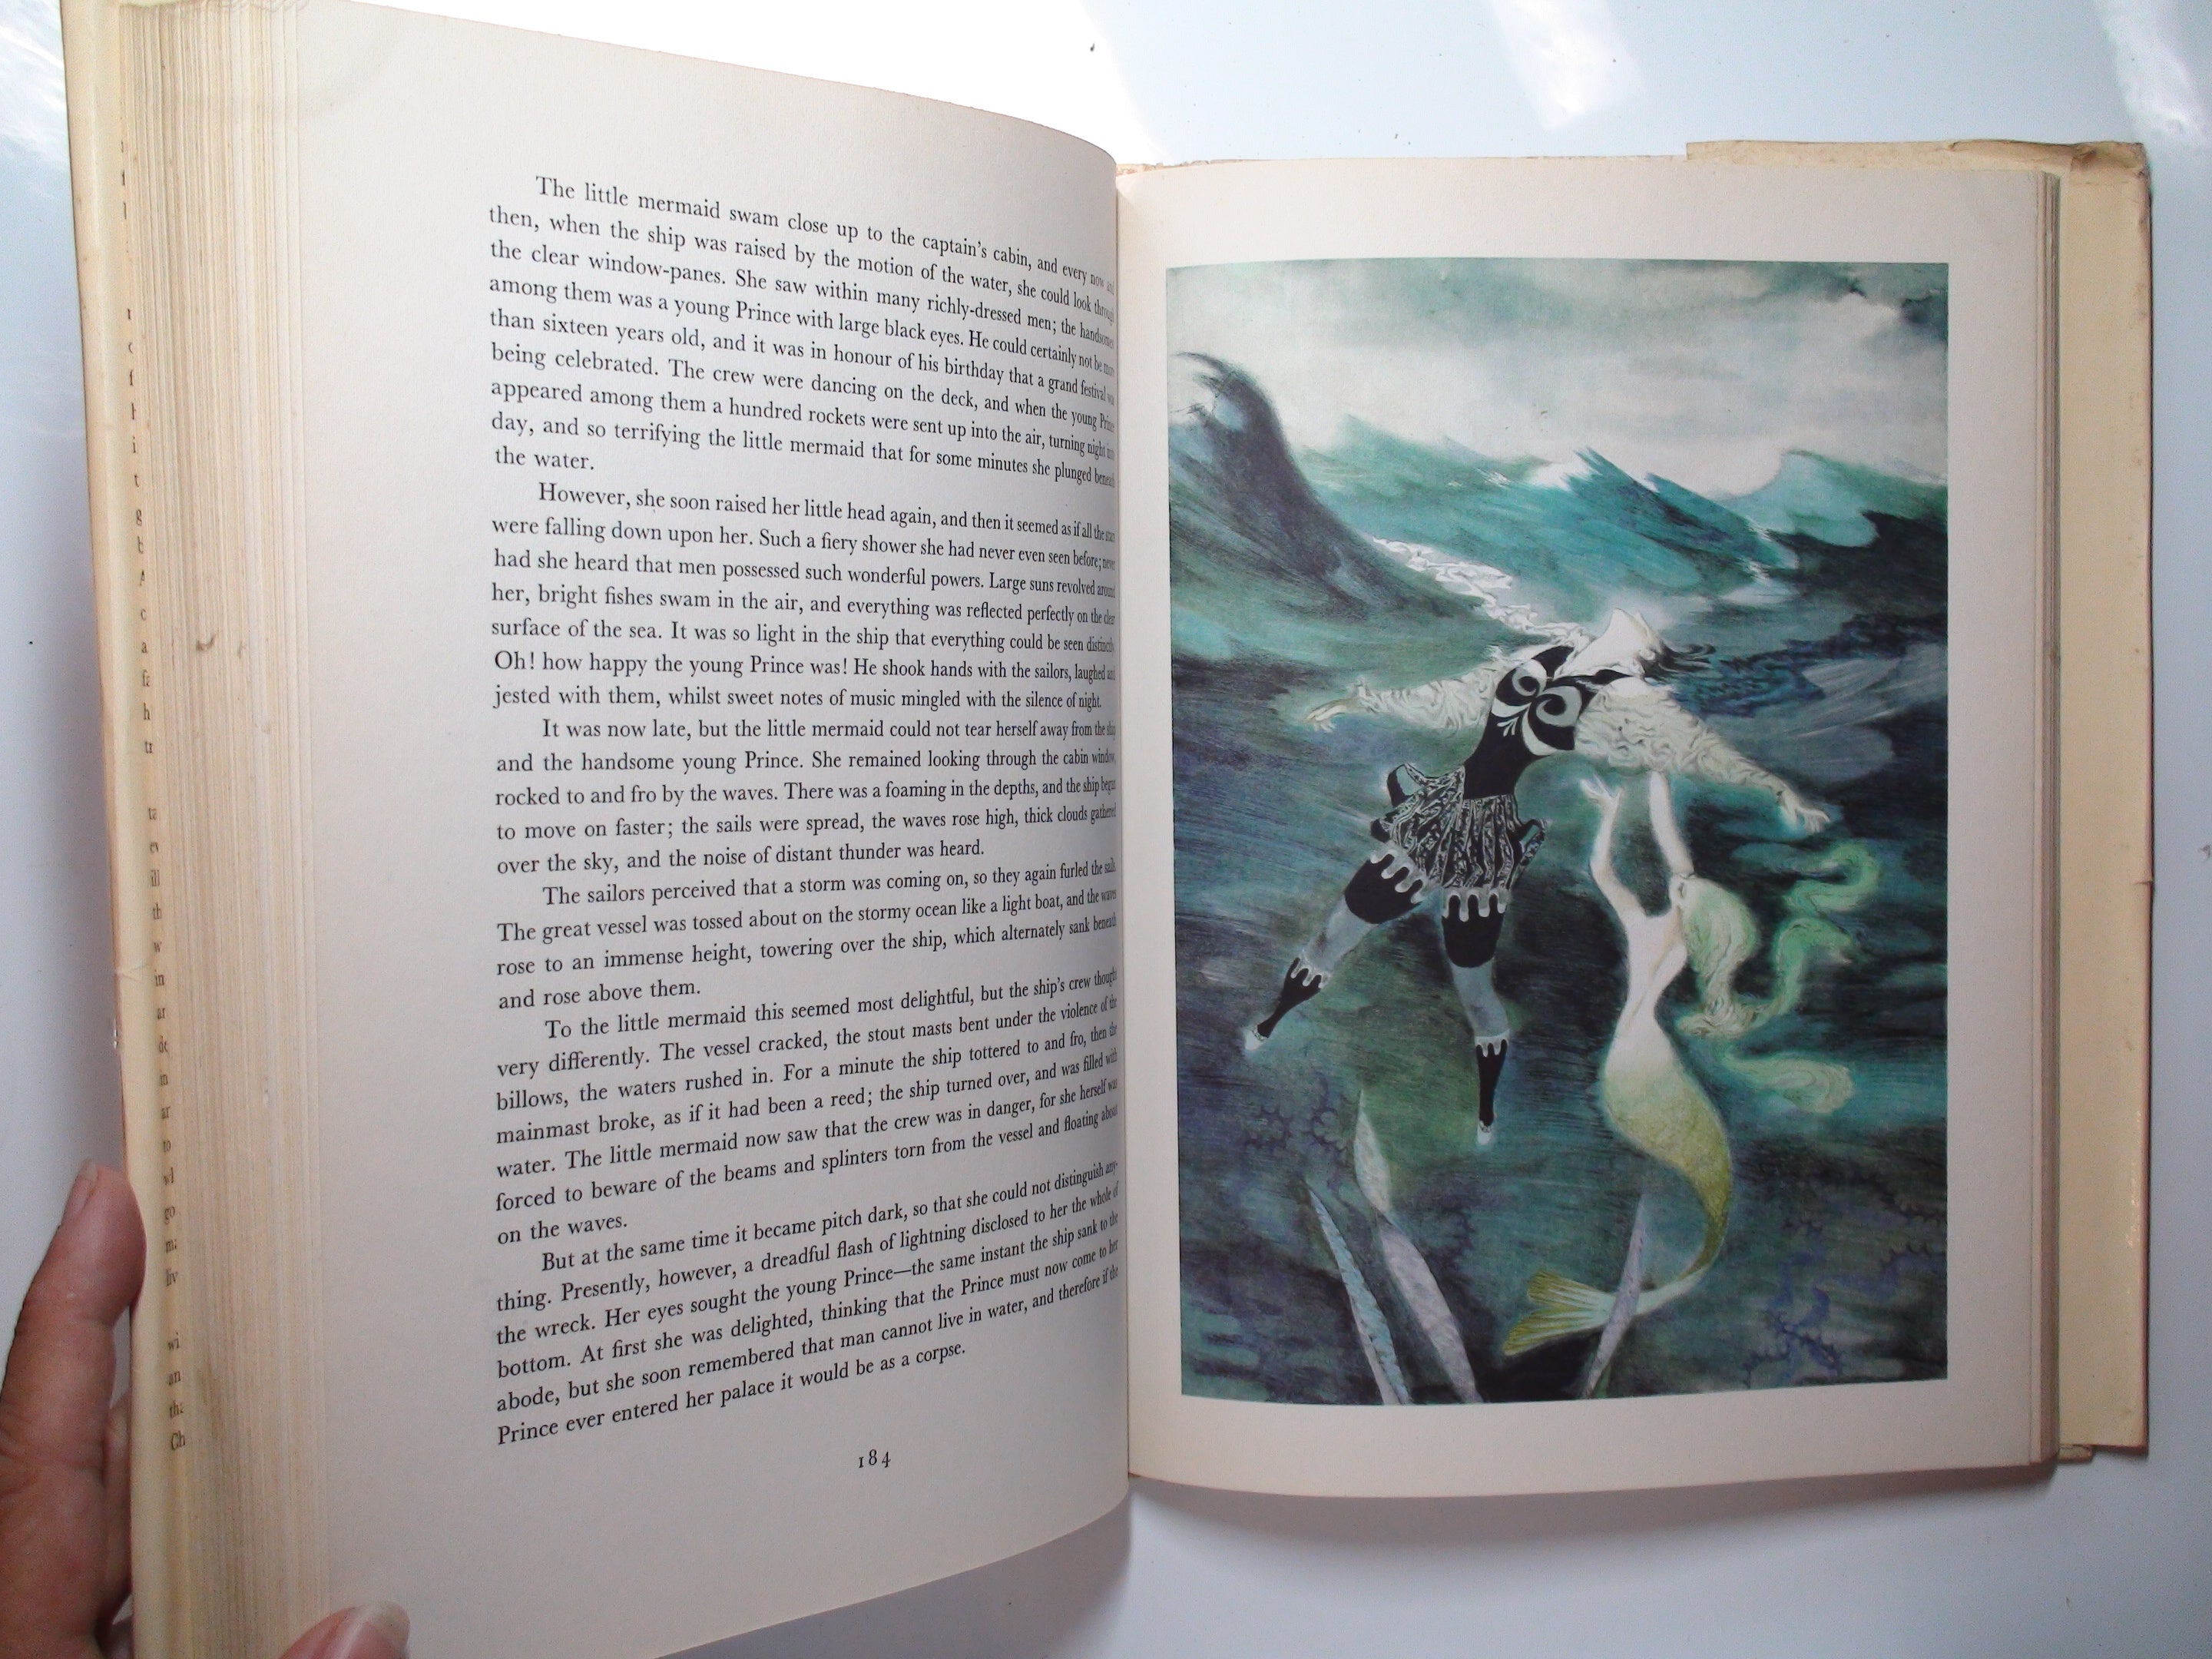 Hans Christian Andersen Fairy Tales, Illustrated by Jiri Trnka, 7th Impression, w/ Dust Jacket, 1967